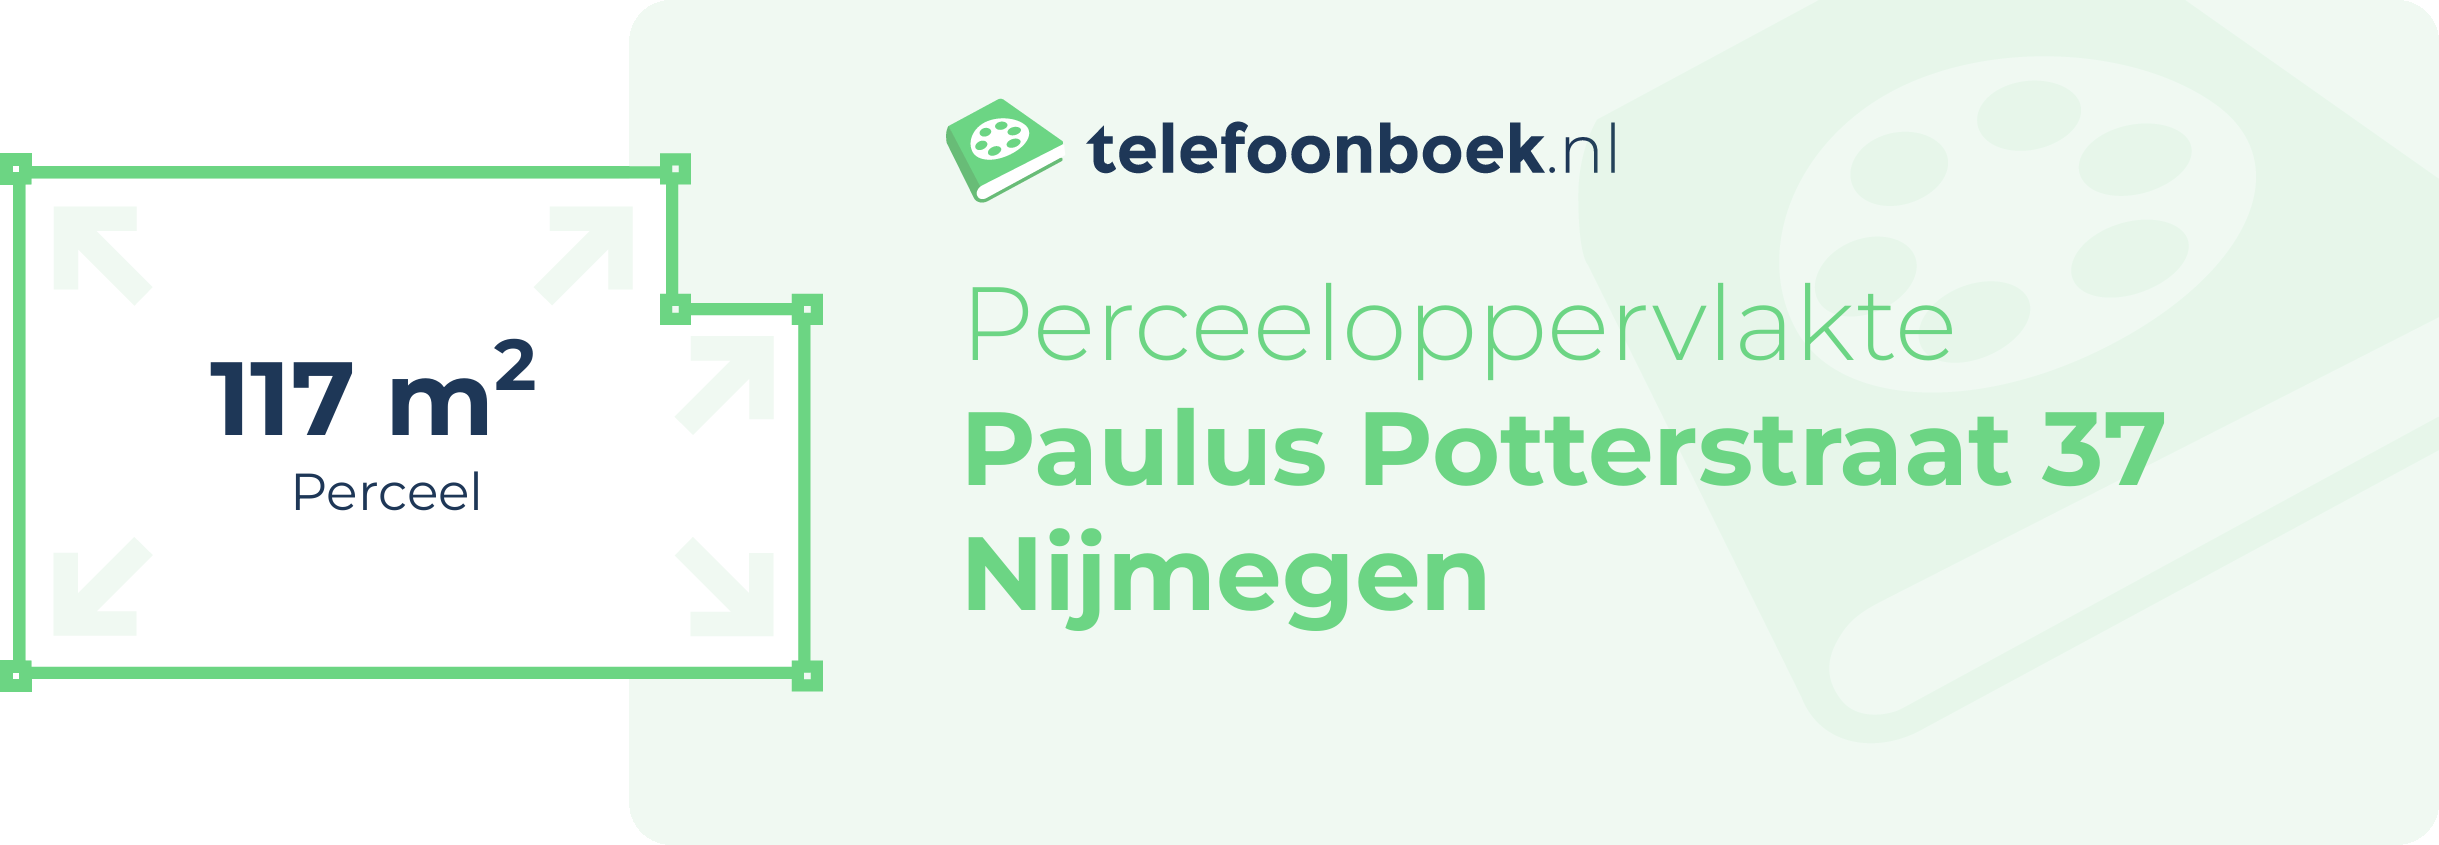 Perceeloppervlakte Paulus Potterstraat 37 Nijmegen